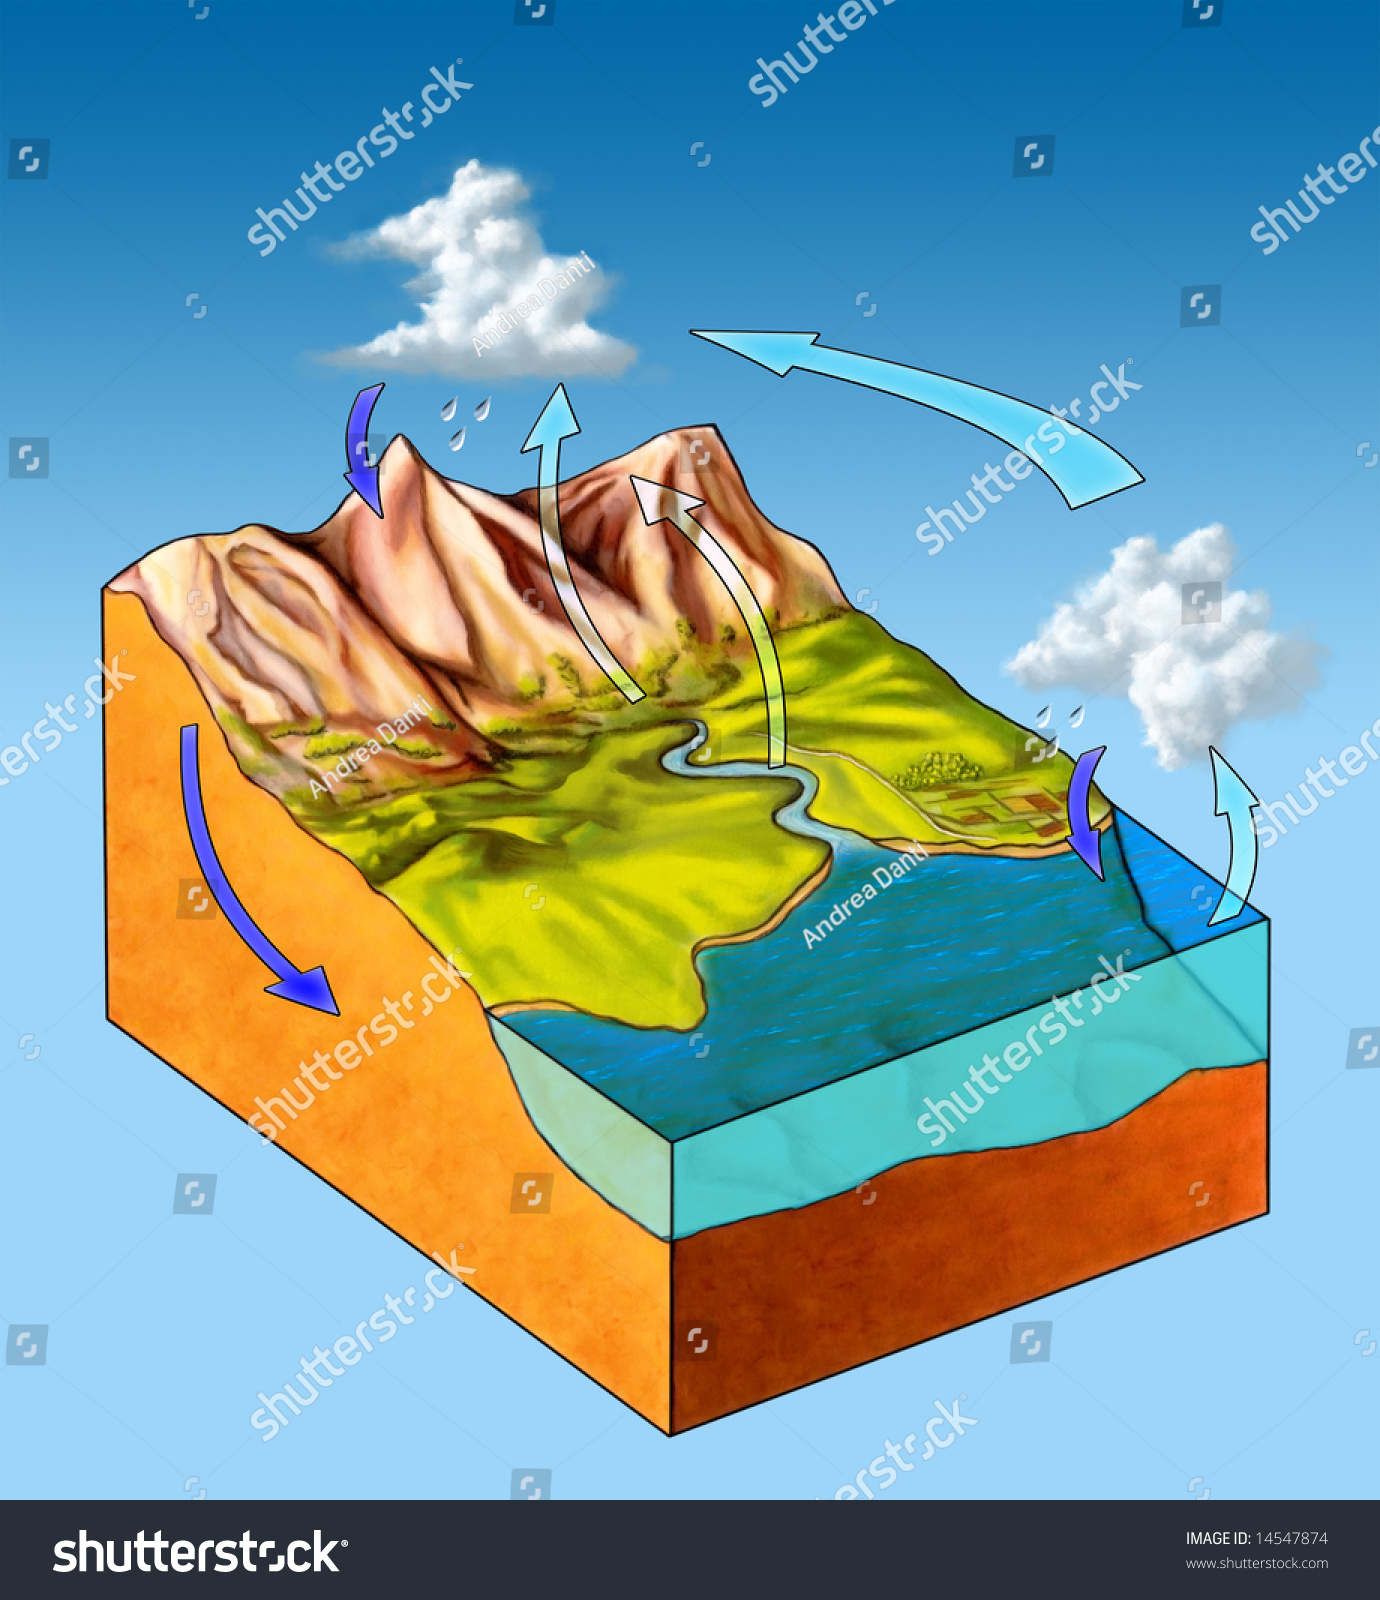 Water Cycle Diagram. Digital Illustration. - 14547874 : Shutterstock